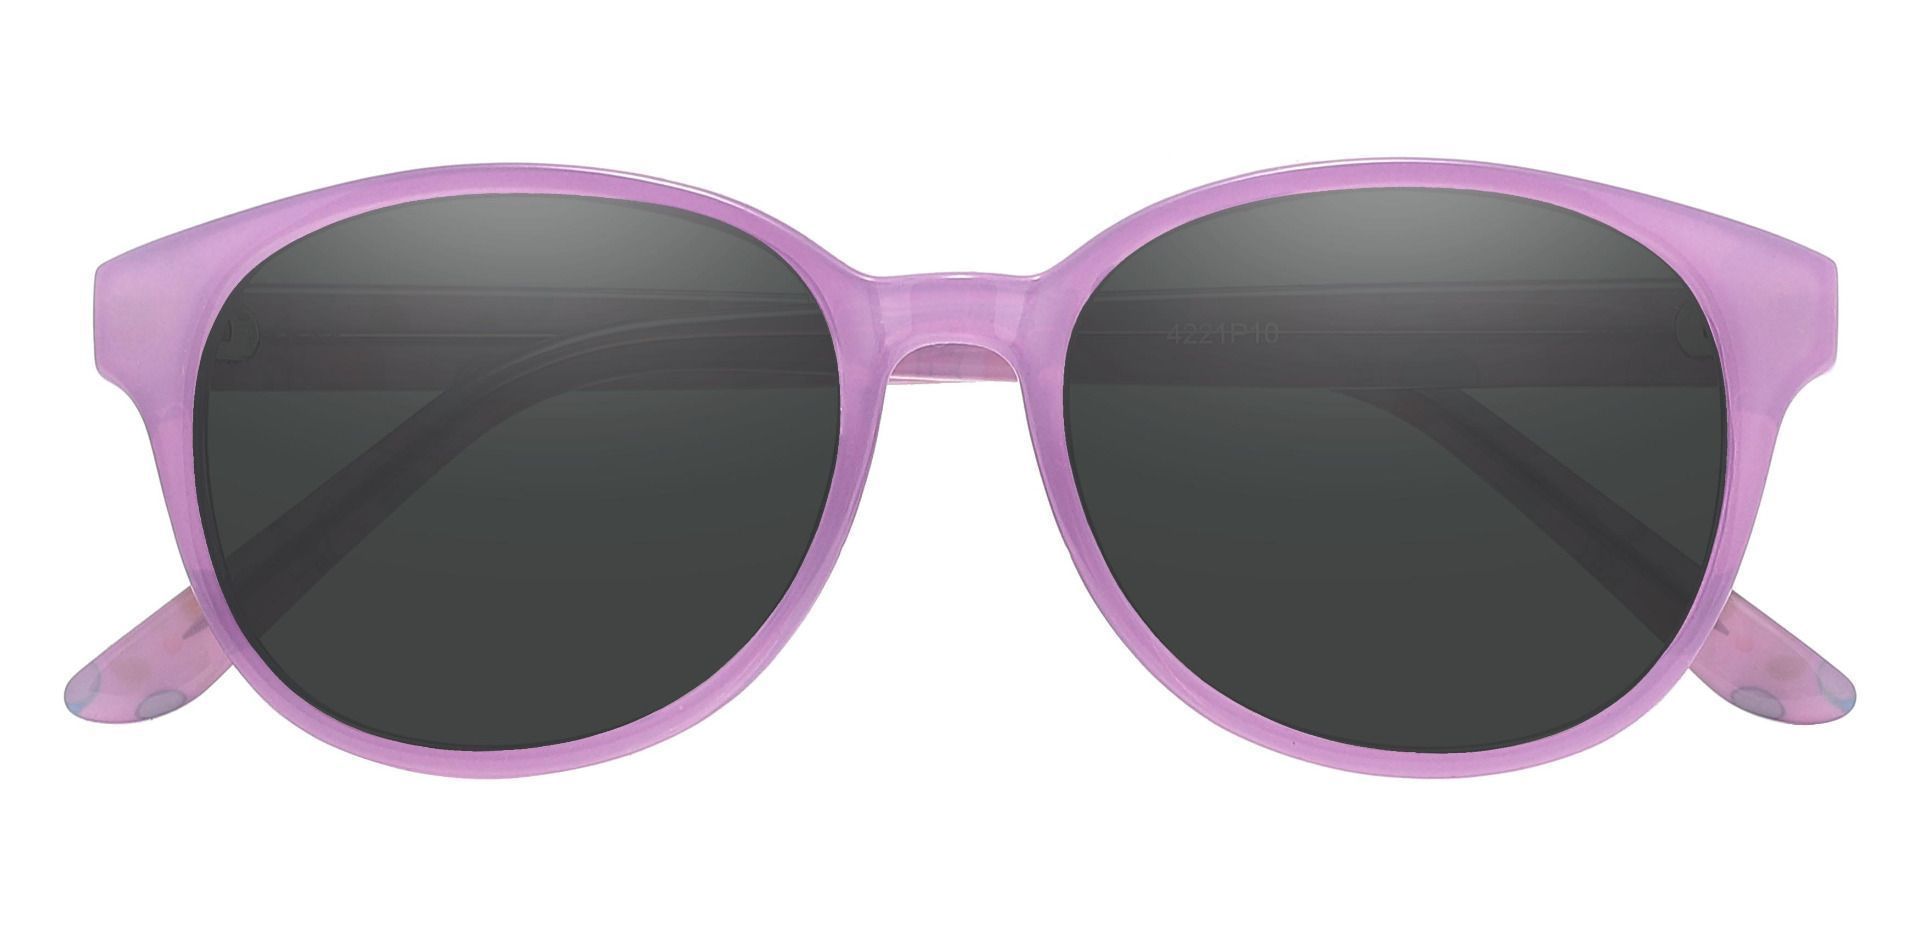 Allegra Oval Prescription Sunglasses - Purple Frame With Gray Lenses